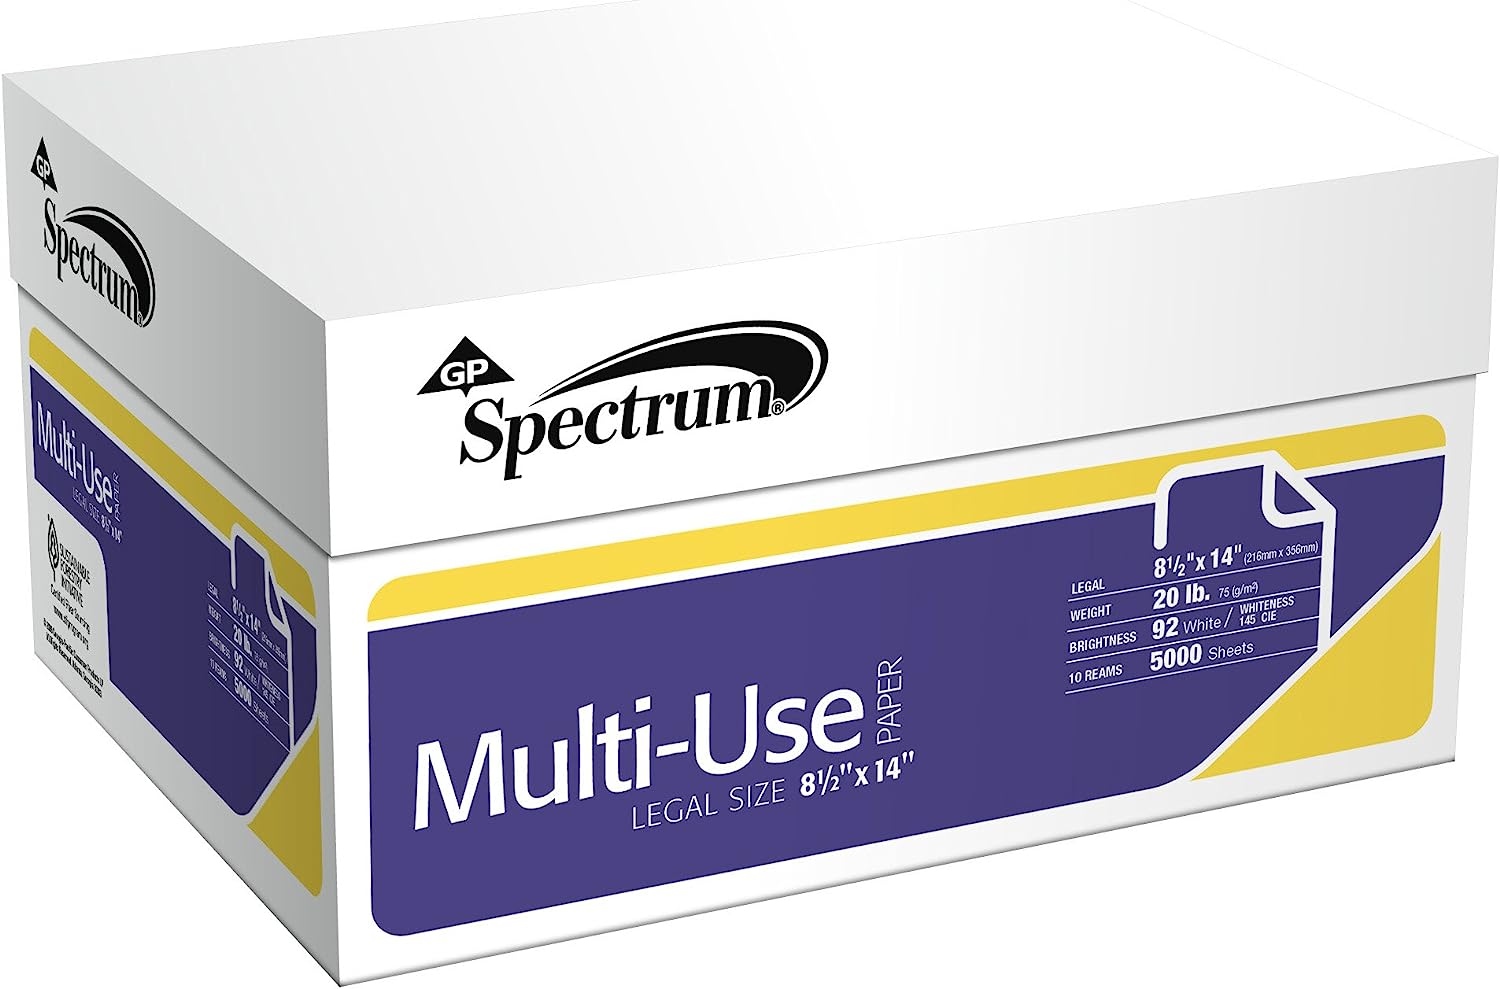 GP Spectrum MultiUse Paper, 8.5 x 14 Inches Legal Size, 92 Bright White, 20 Lb, 10 Reams/Carton (5000 Sheets) $73.22